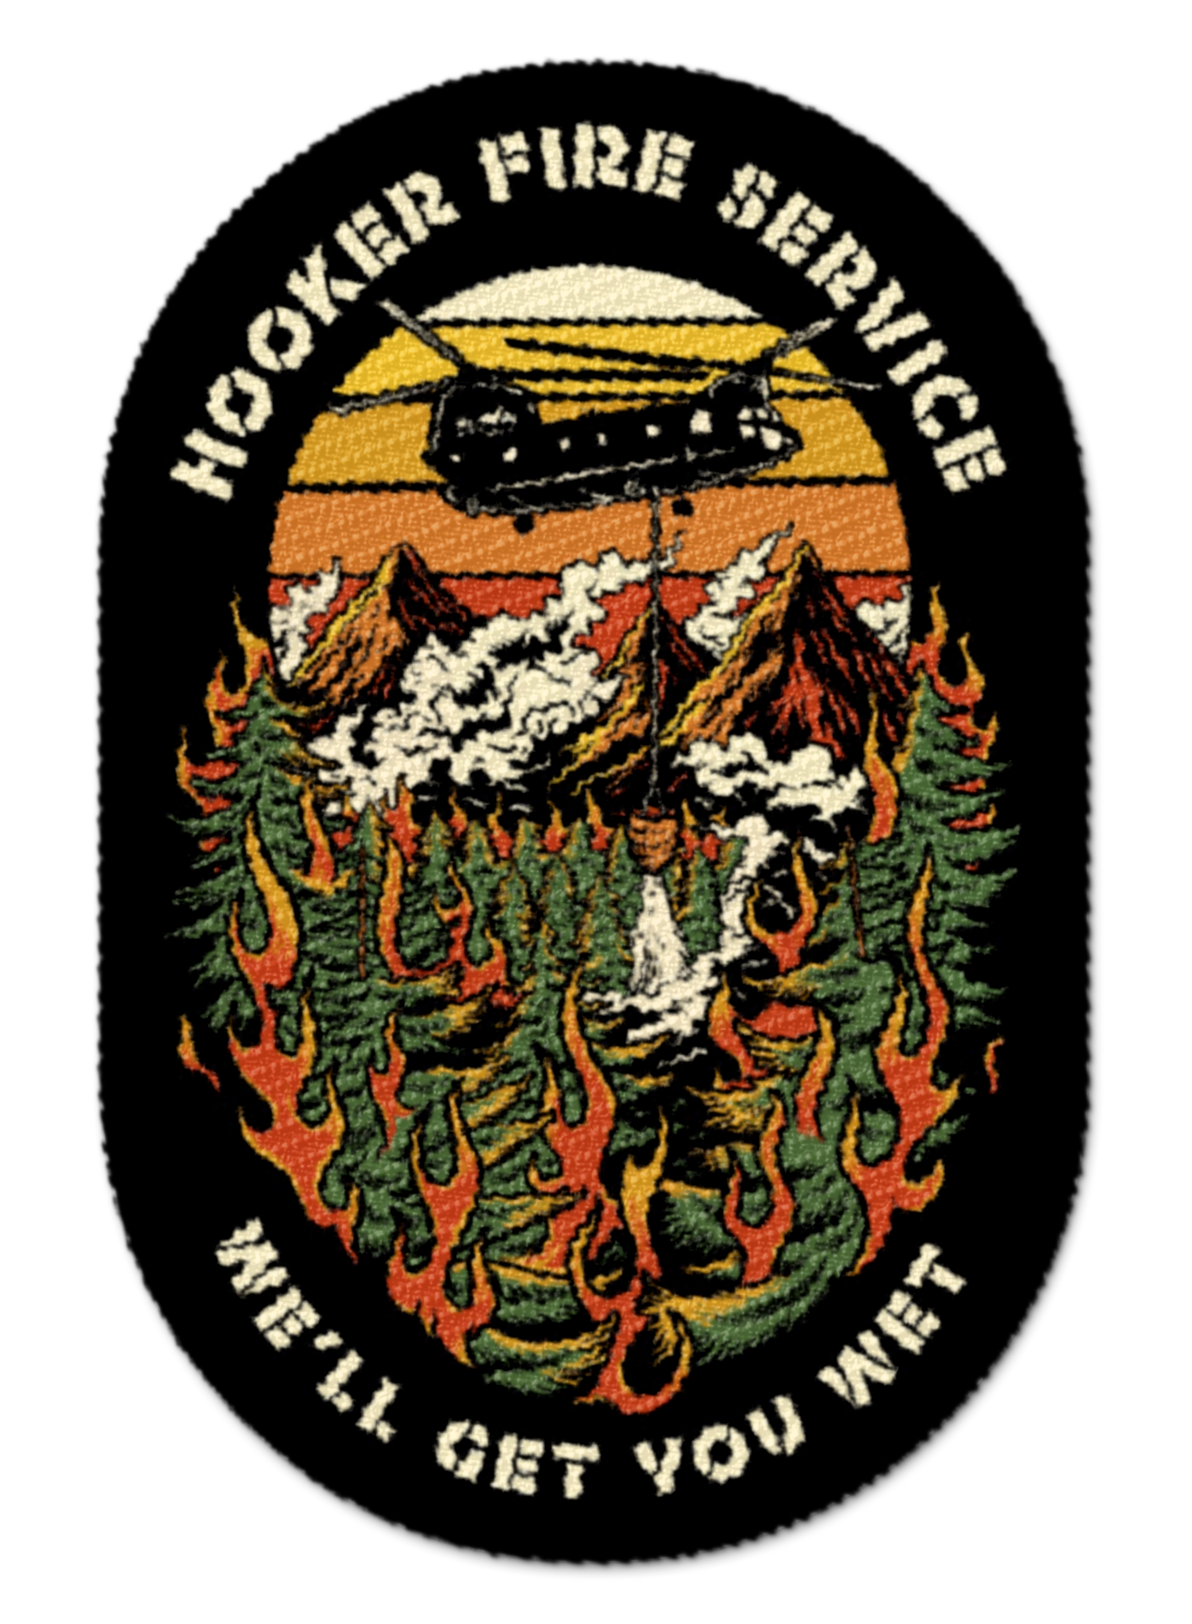 Hooker Fire Service Patch